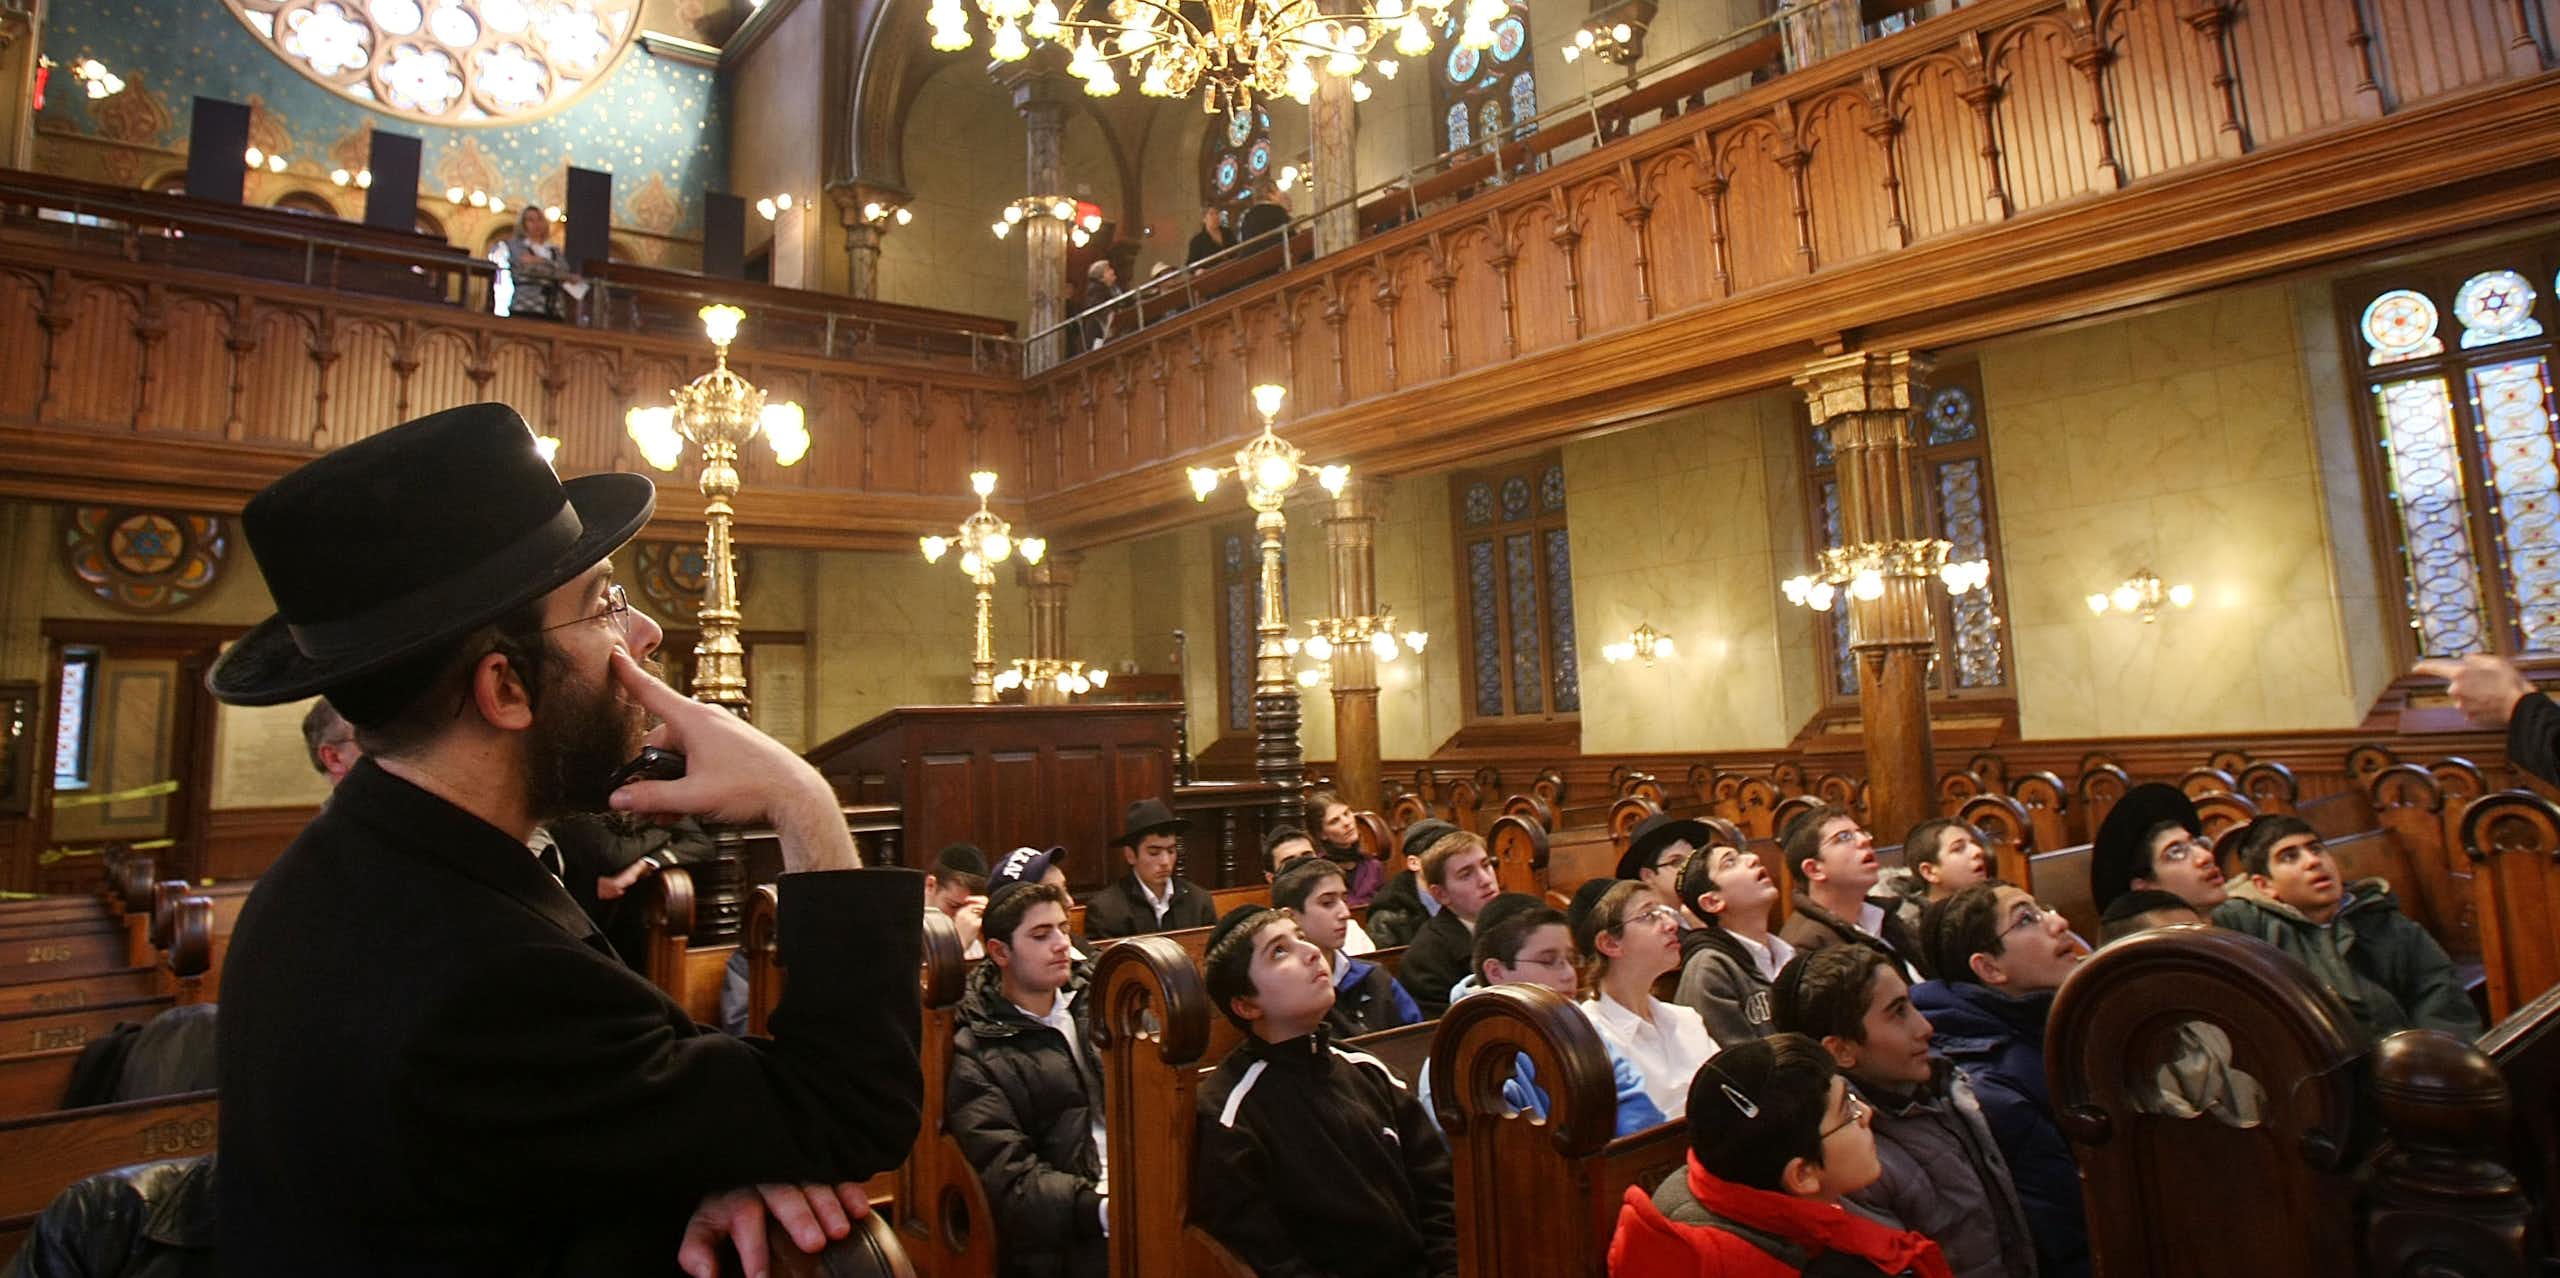 Students admiring the historic Eldridge Street Synagogue in New York City